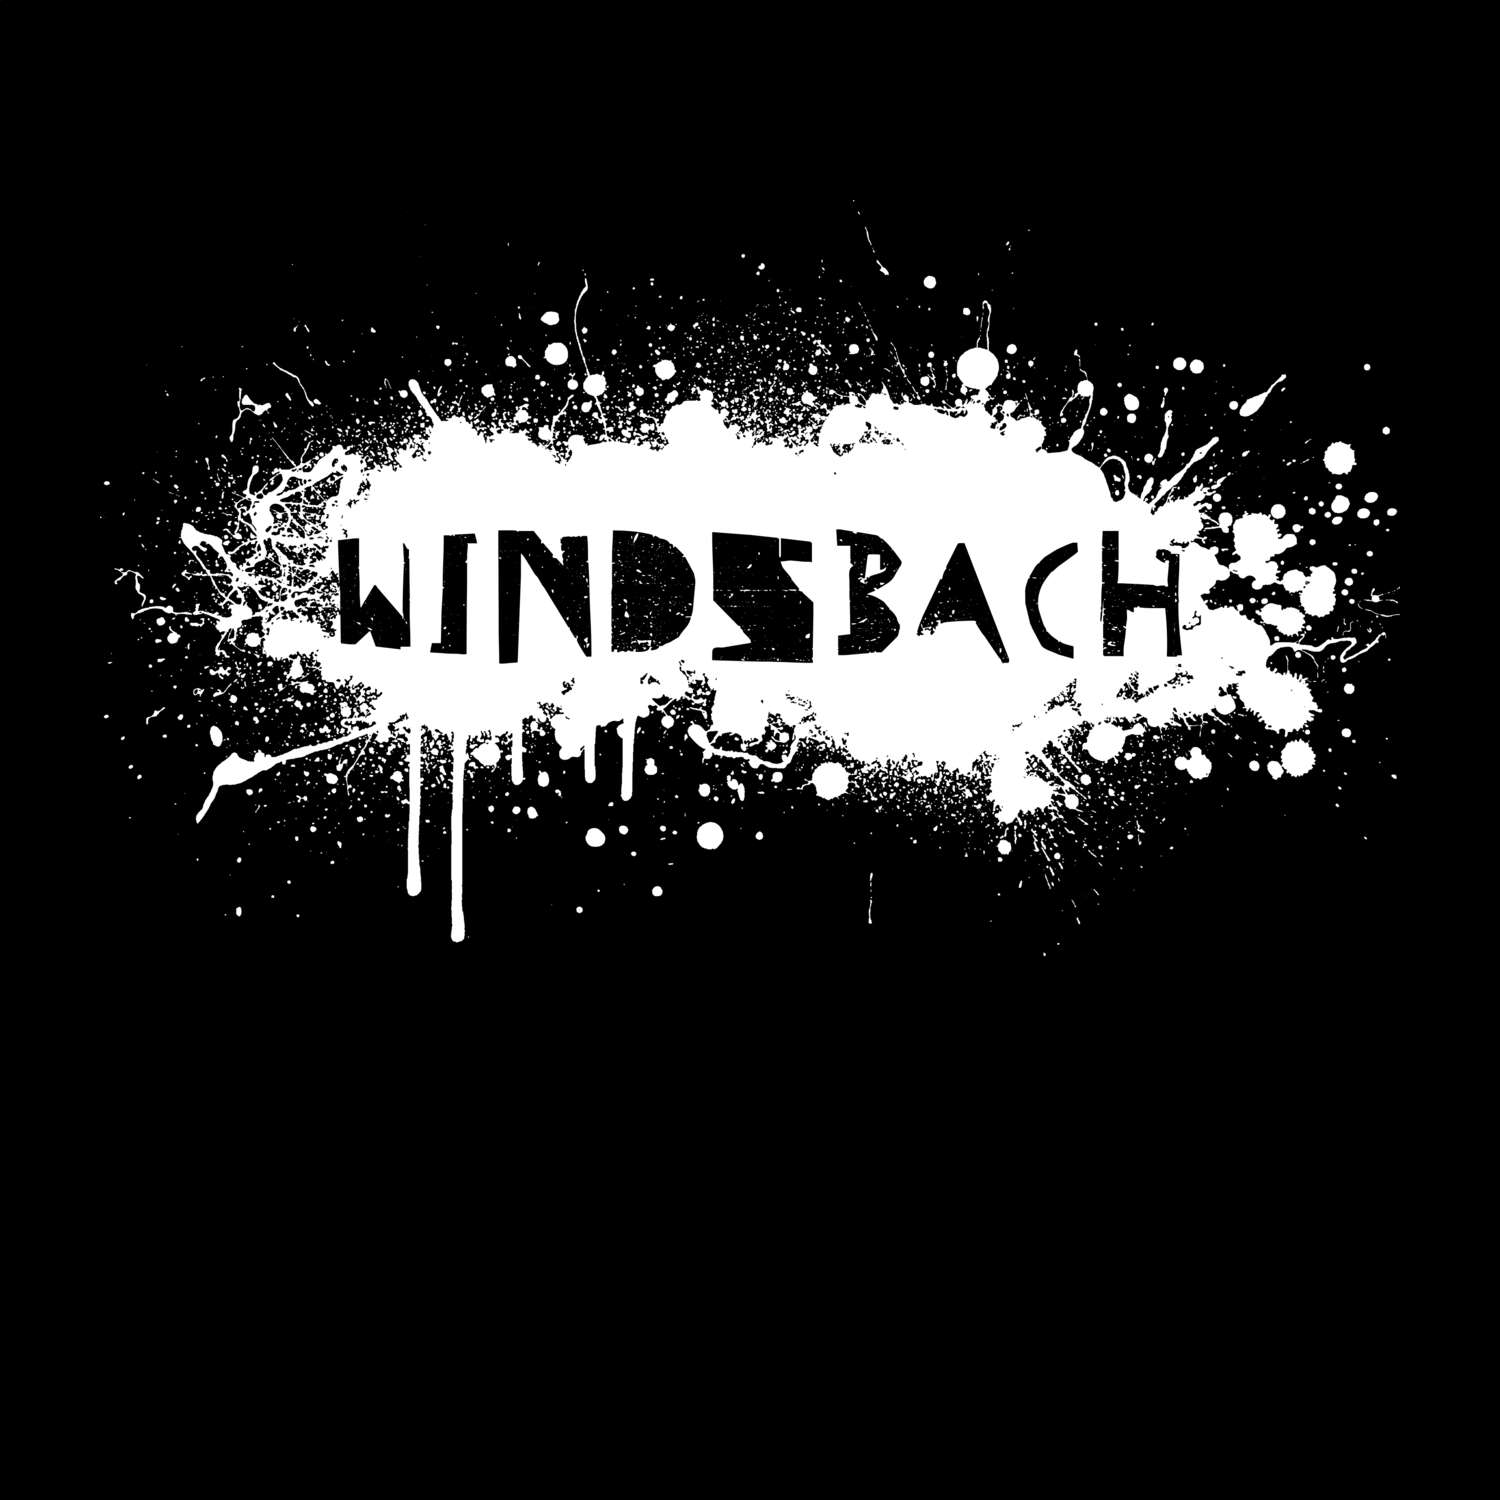 Windsbach T-Shirt »Paint Splash Punk«